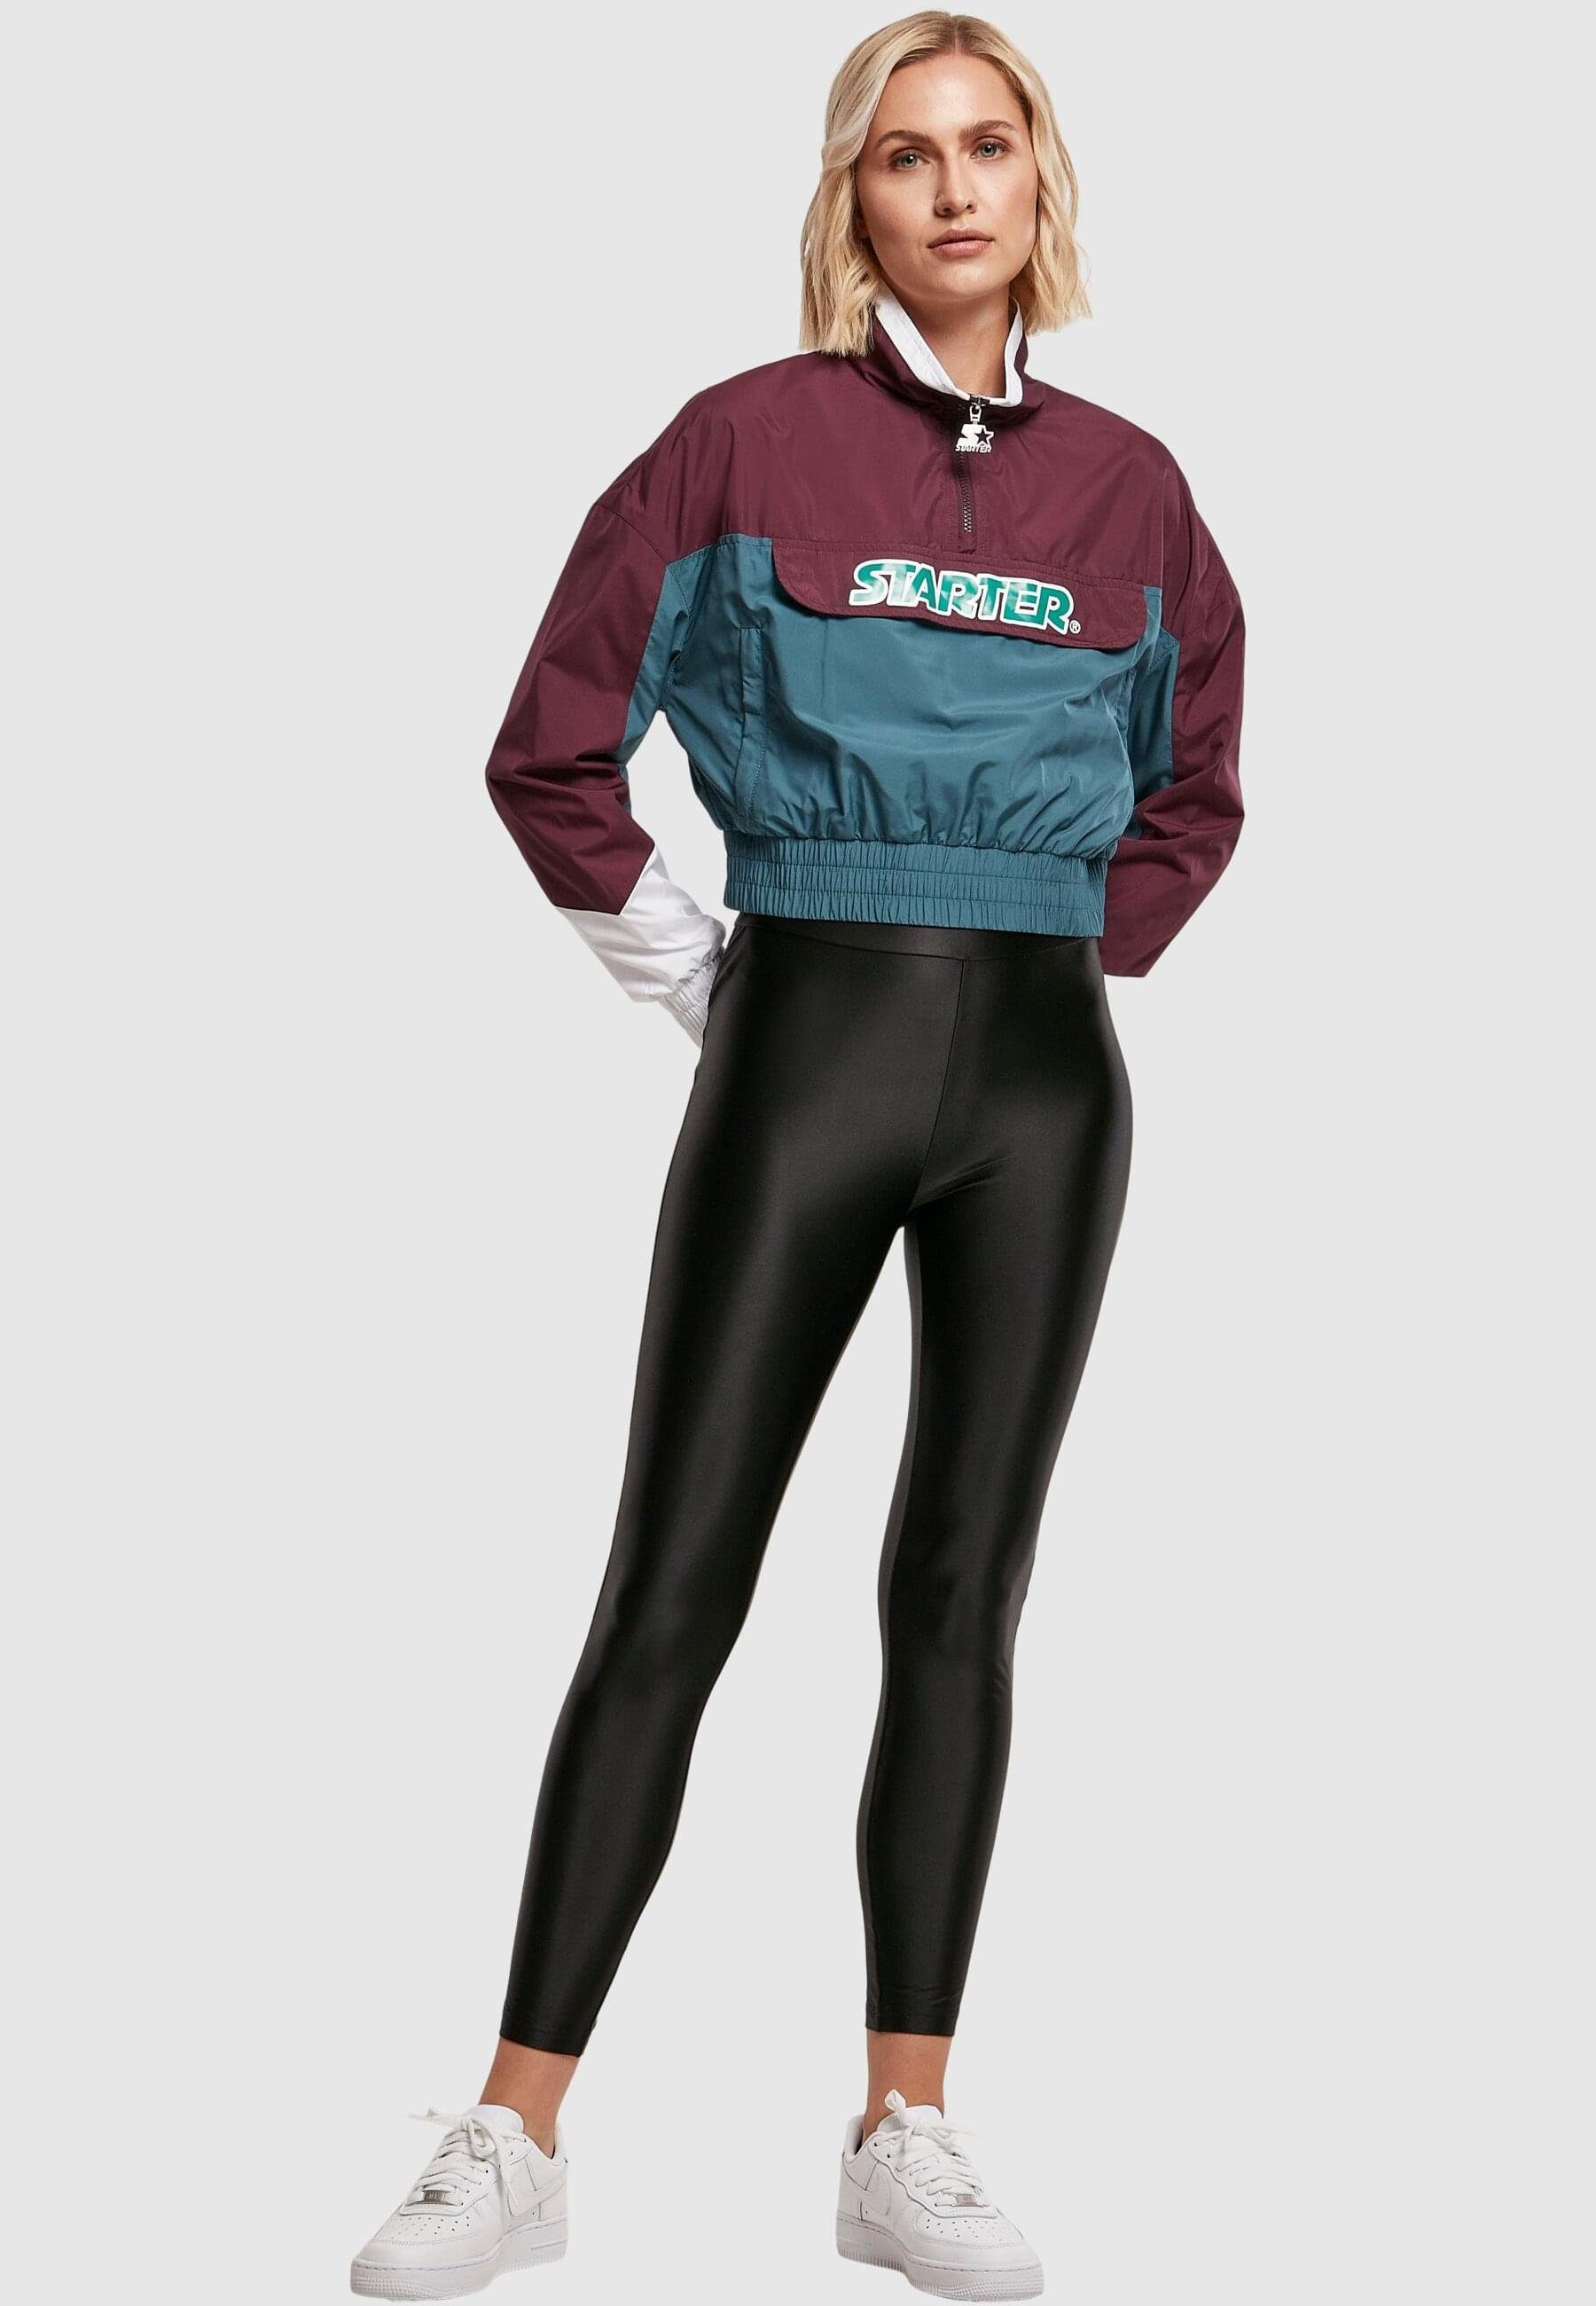 Starter Pull Damen darkviolet/teal Outdoorjacke Black (1-St) Over Colorblock Jacket Label Starter Ladies